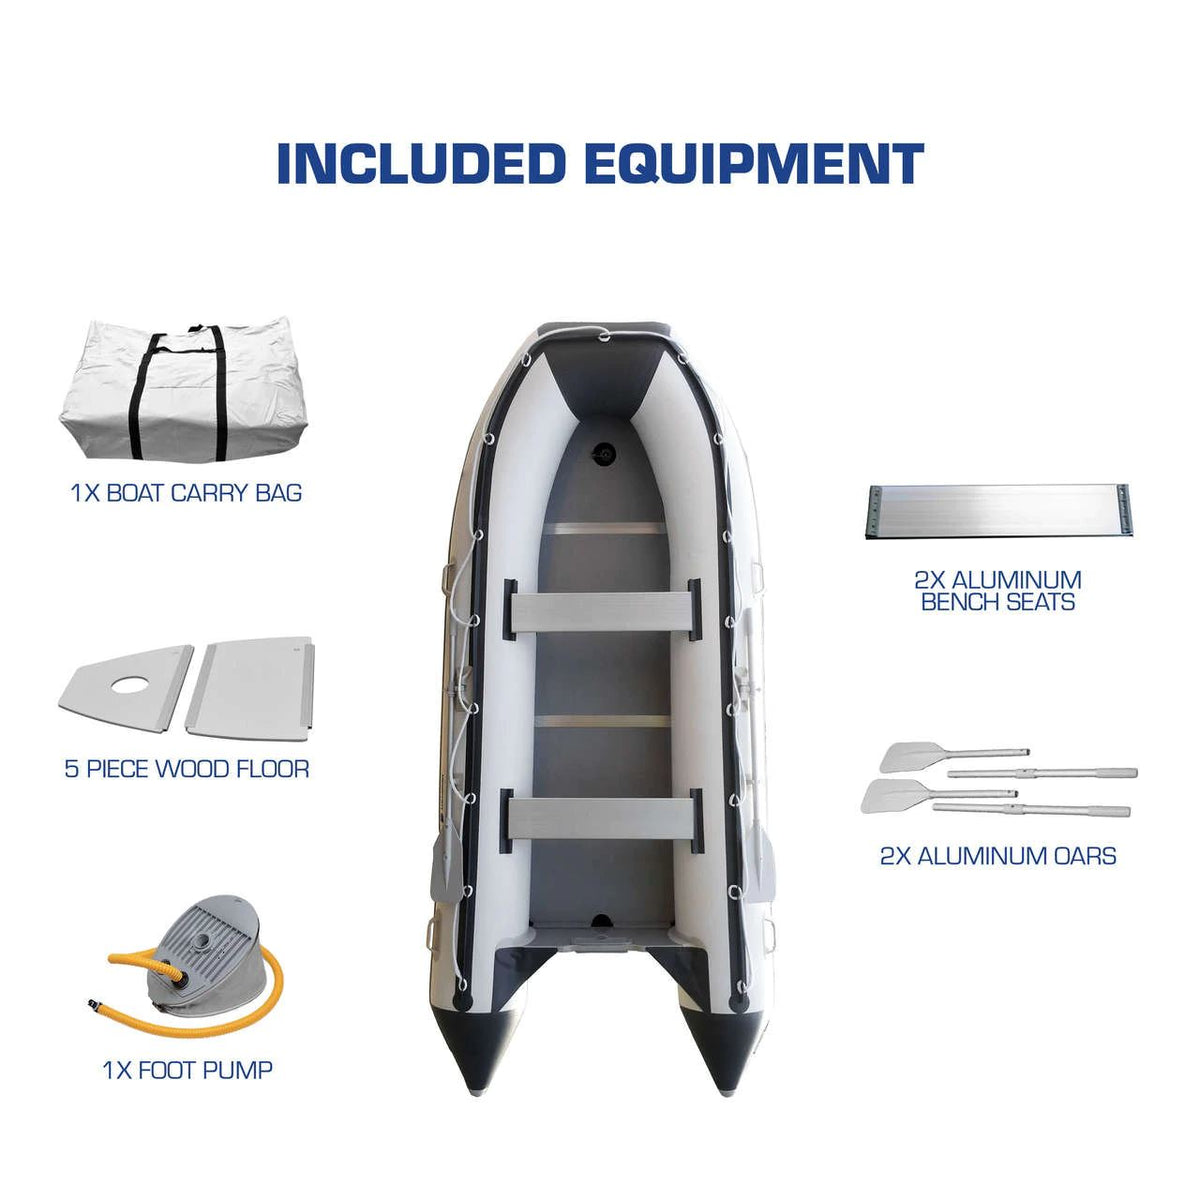 Newport Catalina Inflatable Boat - 12ft Marine Wood Floor